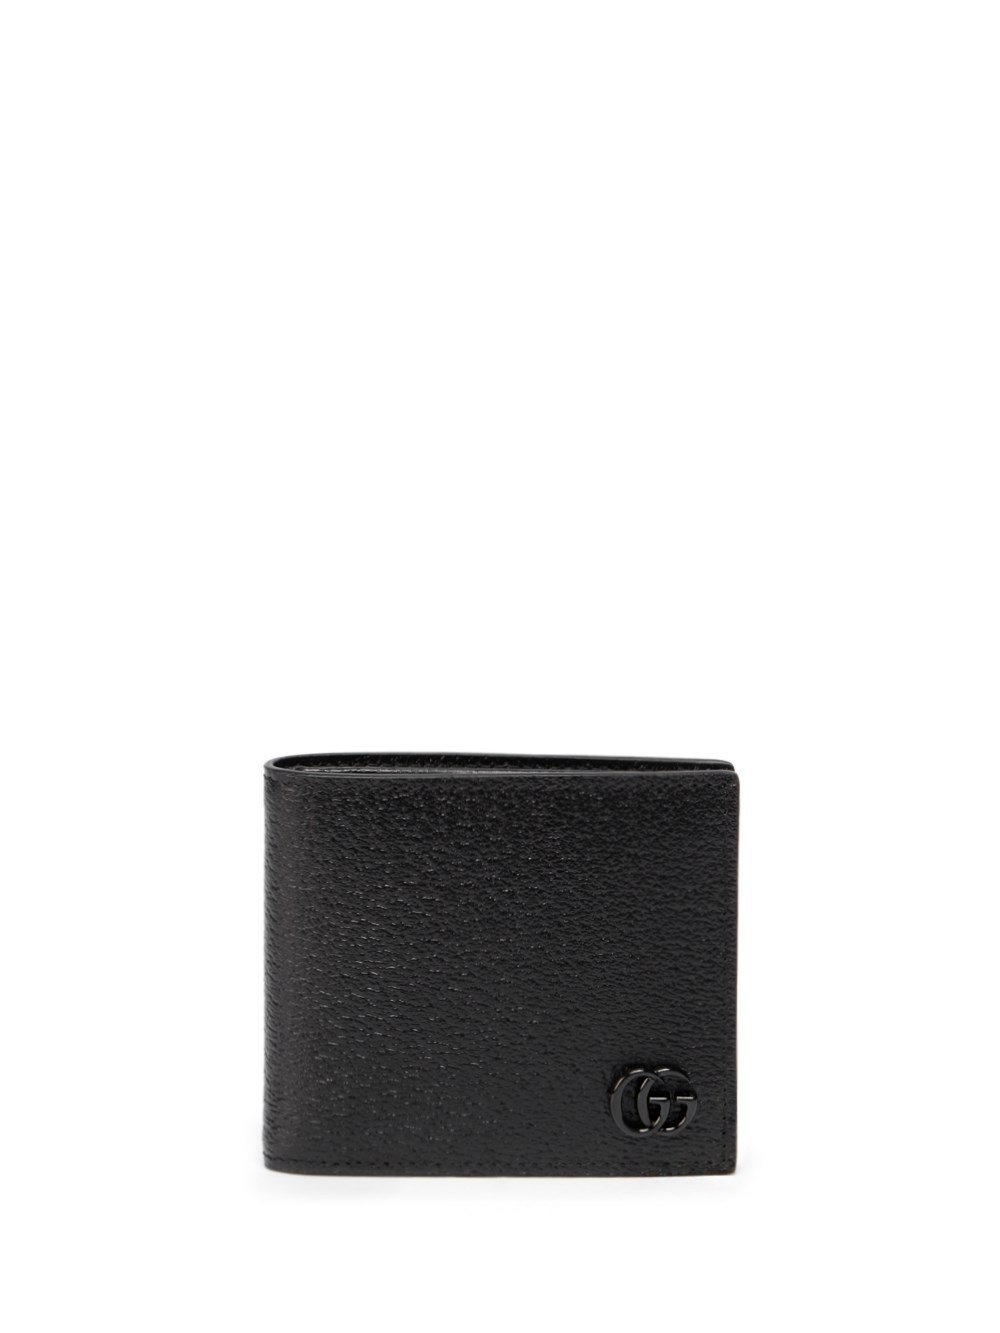 Gucci - GG Leather Bi-Fold Wallet - Mens - Black